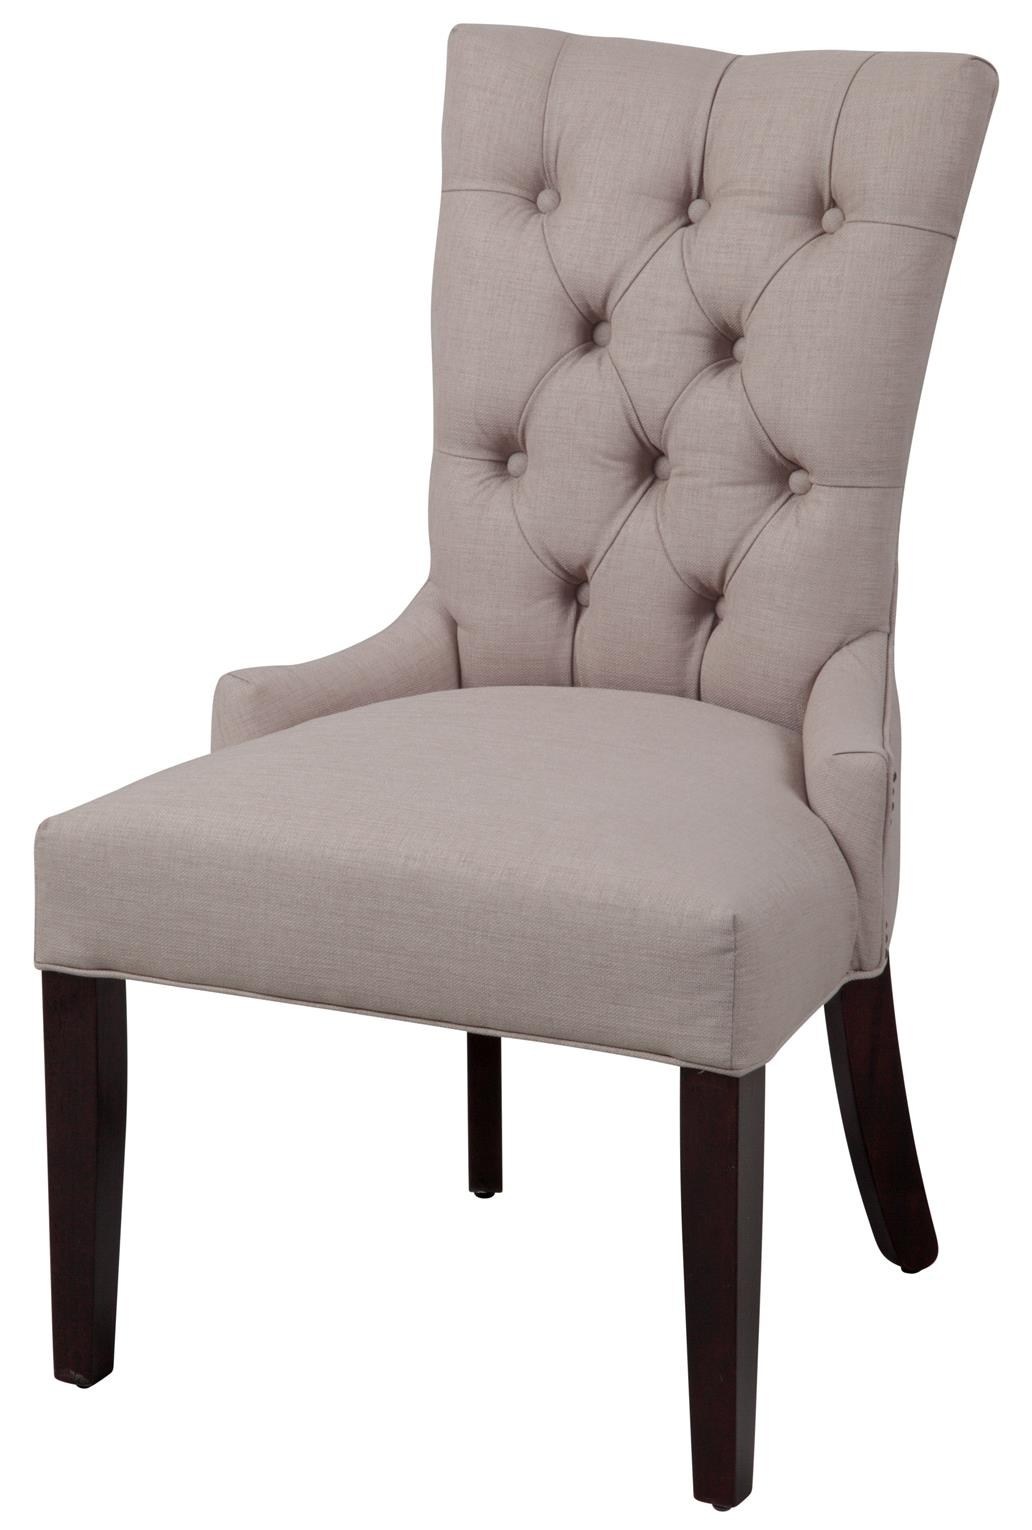 CMI Parson Chairs Customizable Parson's Chair | Wayside Furniture